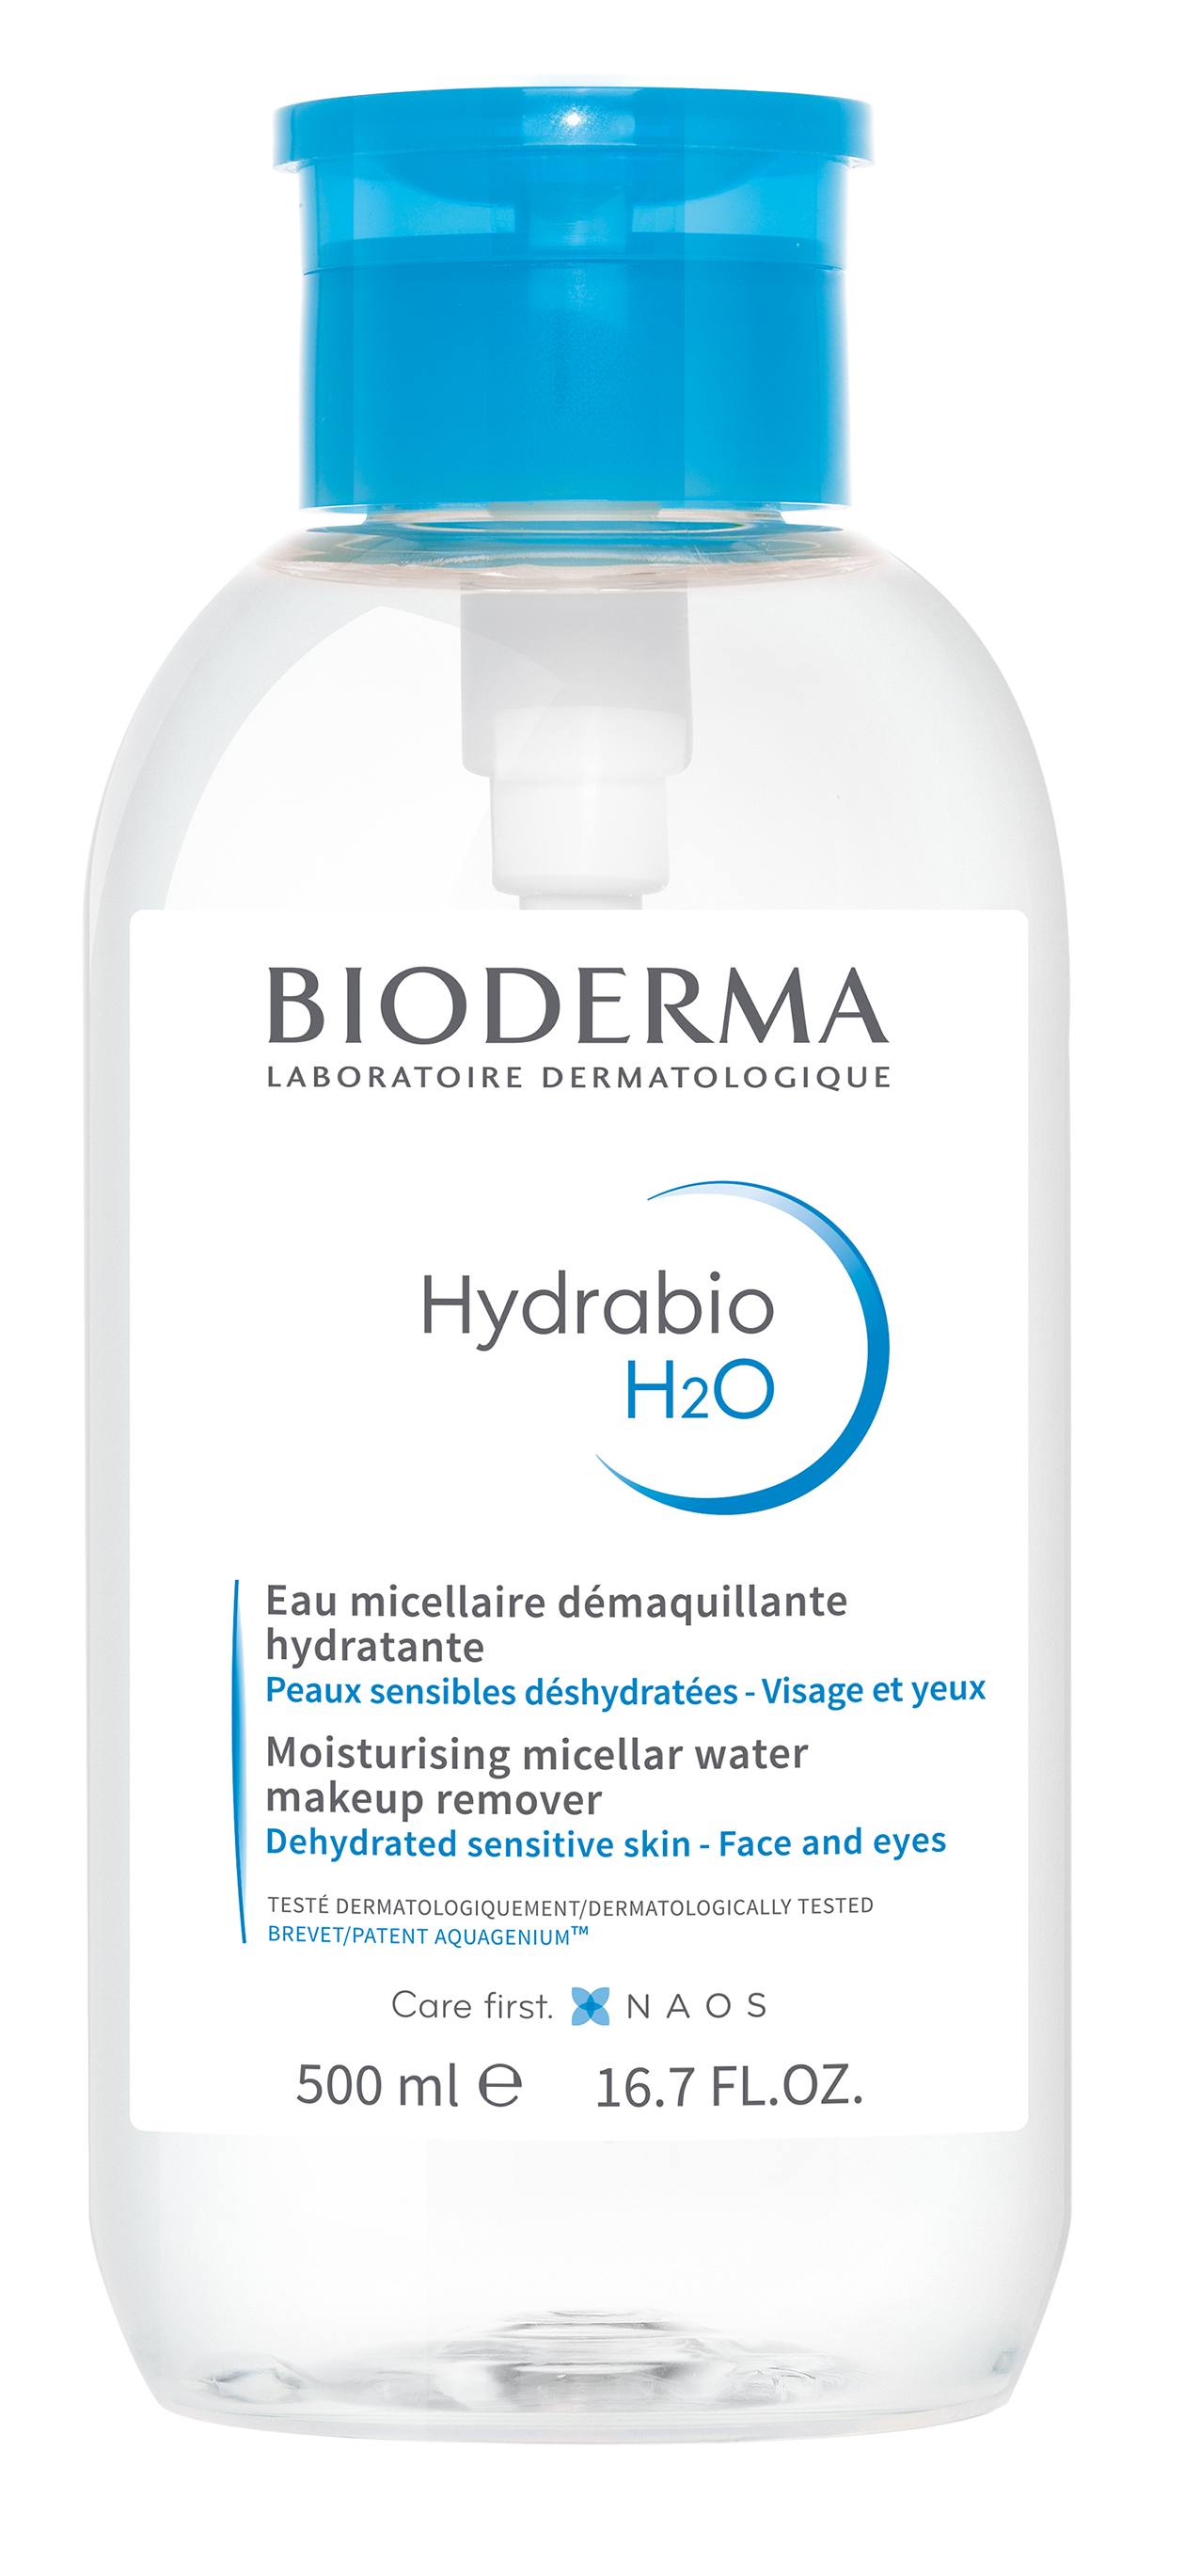 Bioderma Hydrabio H2O Solução Micelar Pump Reverse 500ml